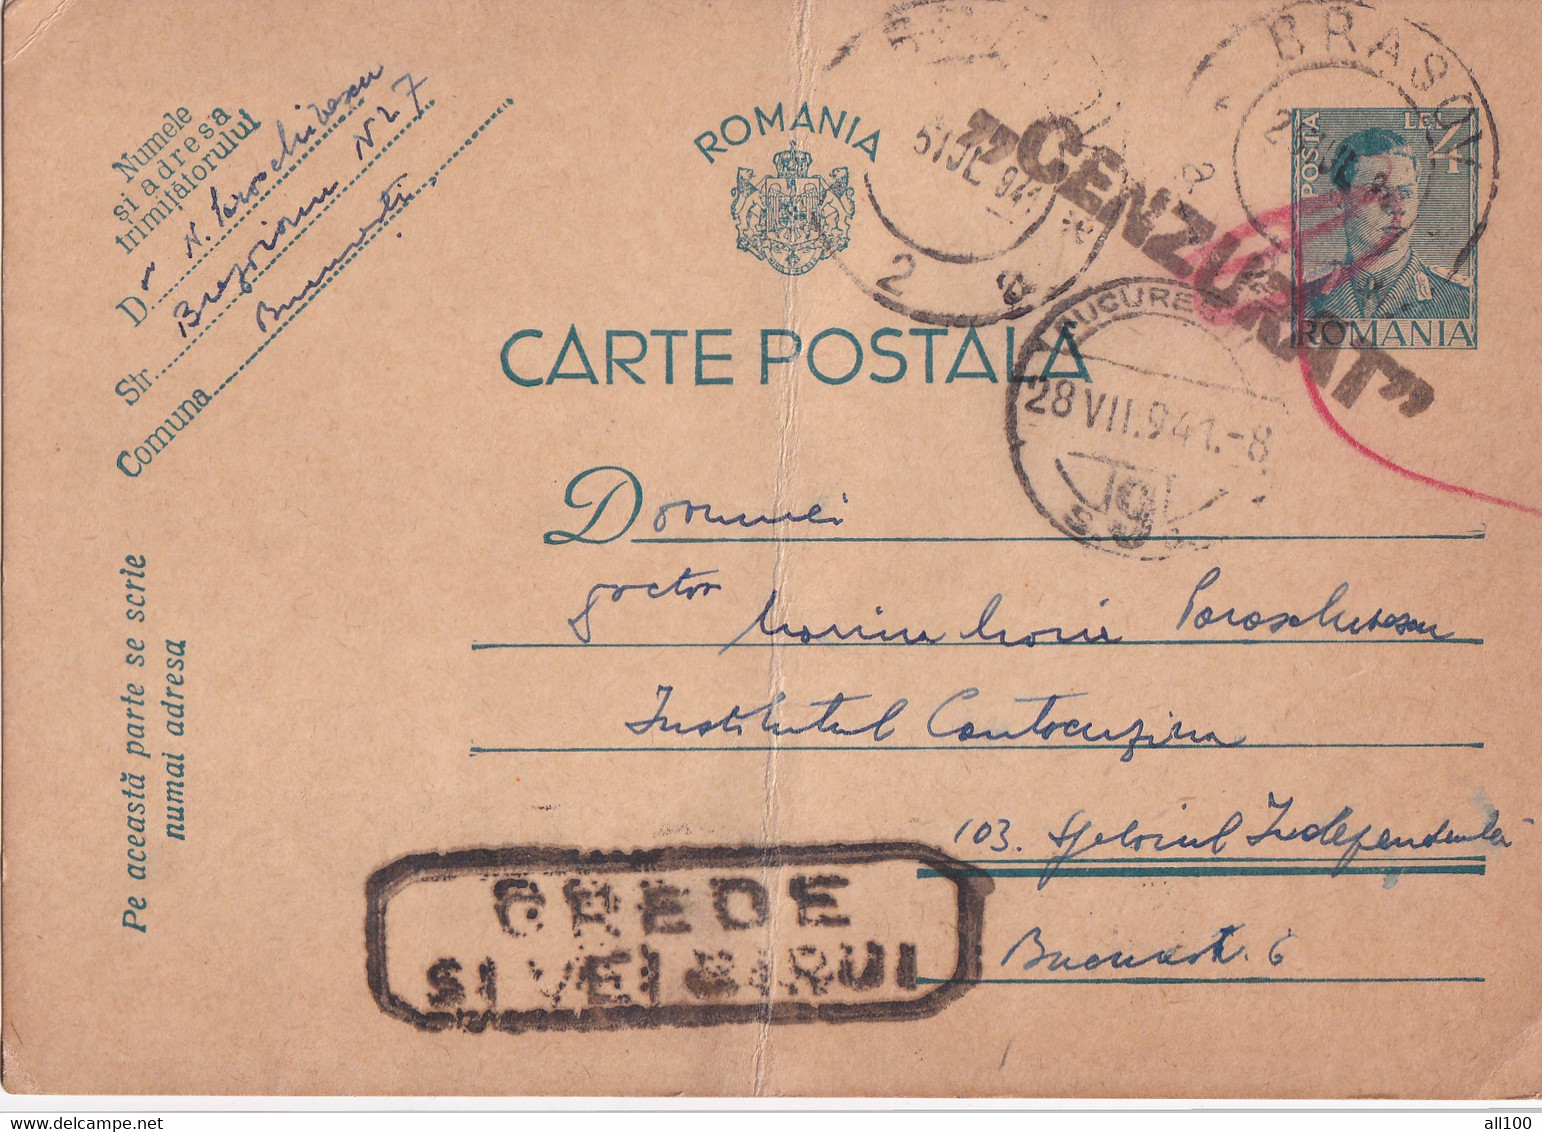 A16458 - MILITARY LETTER ROMANIA POSTAL STATIONERY CENZORED BRASOV  CREDE SI VEI BIRUI STAMPEL  KING MICHAEL 4 LEI 1941 - 2de Wereldoorlog (Brieven)